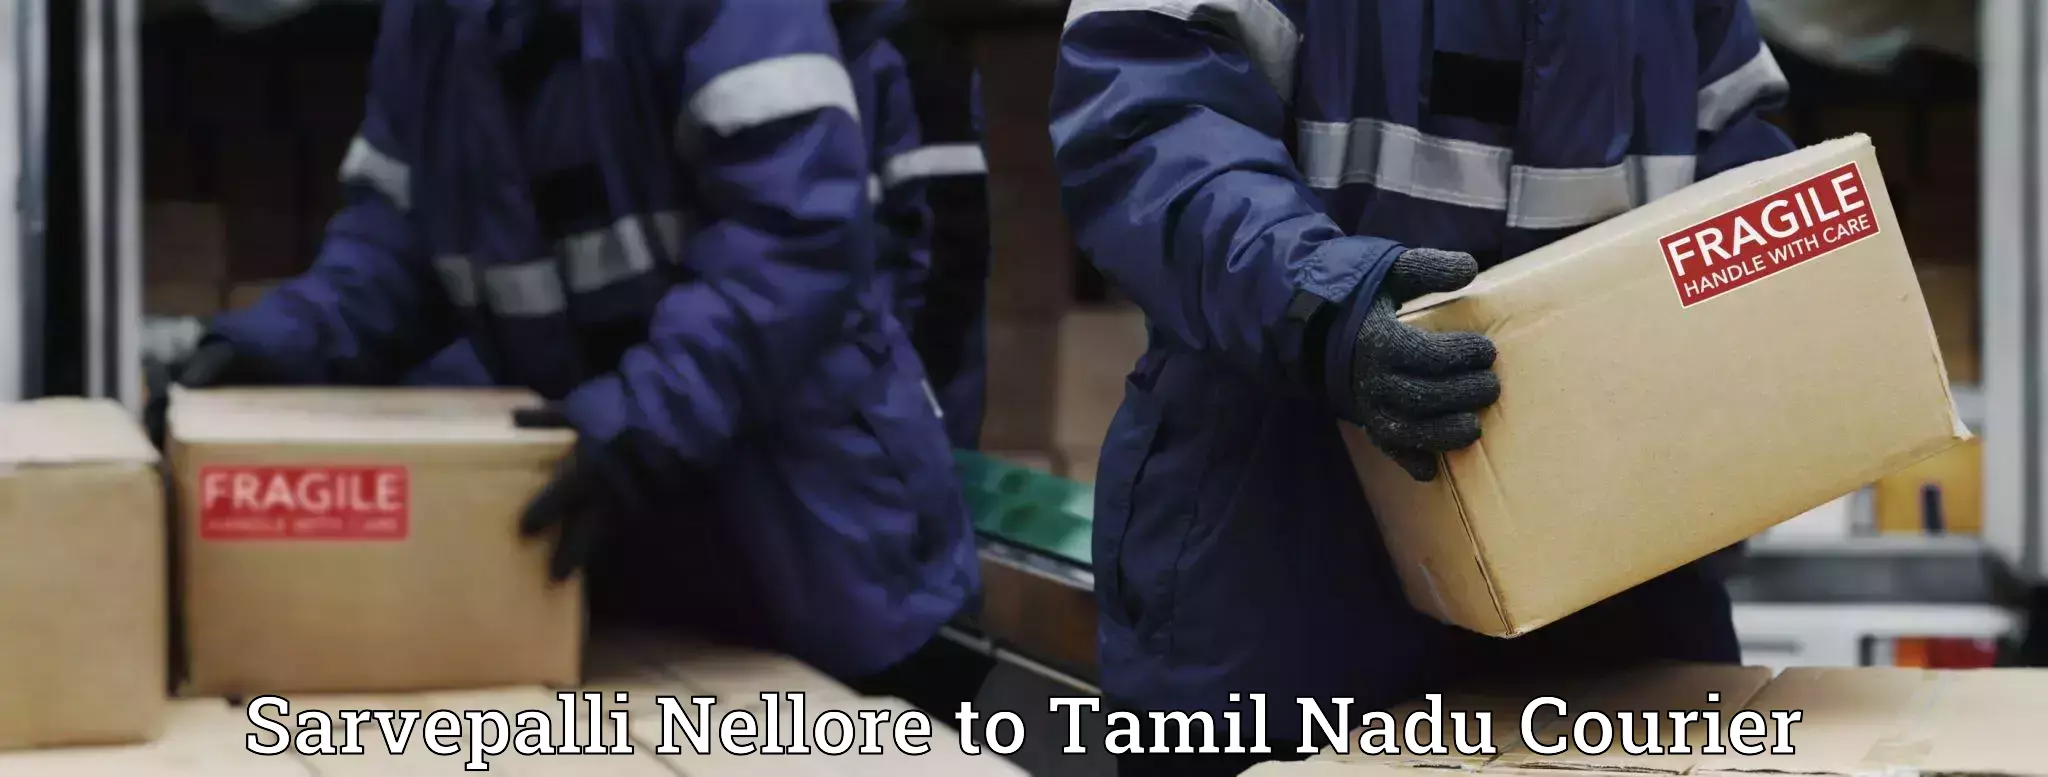 Sustainable courier practices Sarvepalli Nellore to Tamil Nadu